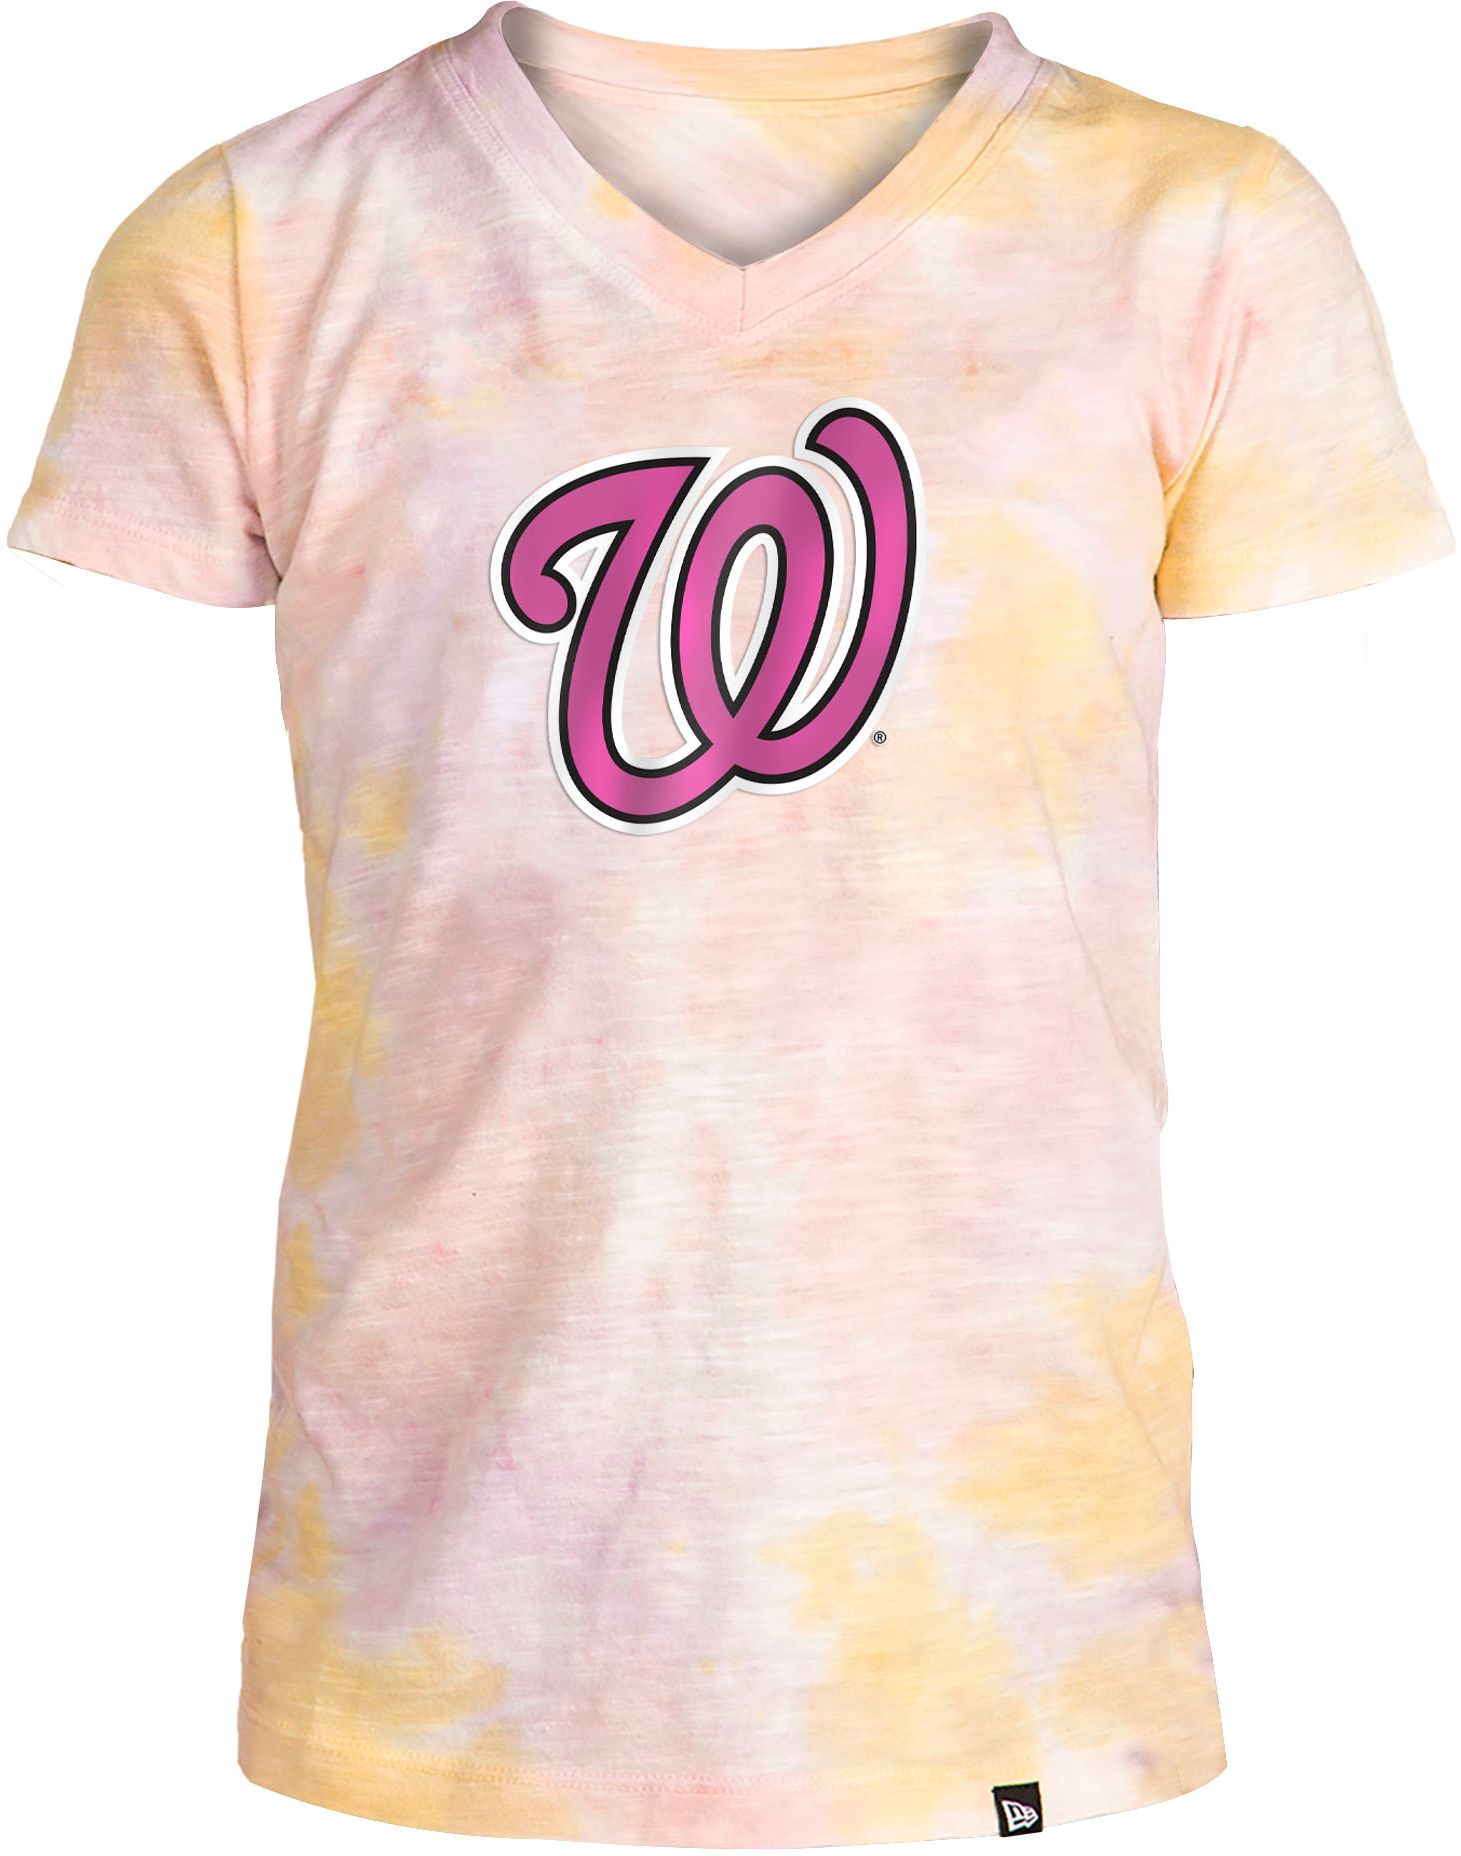 New Era / Apparel Girl's Washington Nationals Tie Dye V-Neck T-Shirt